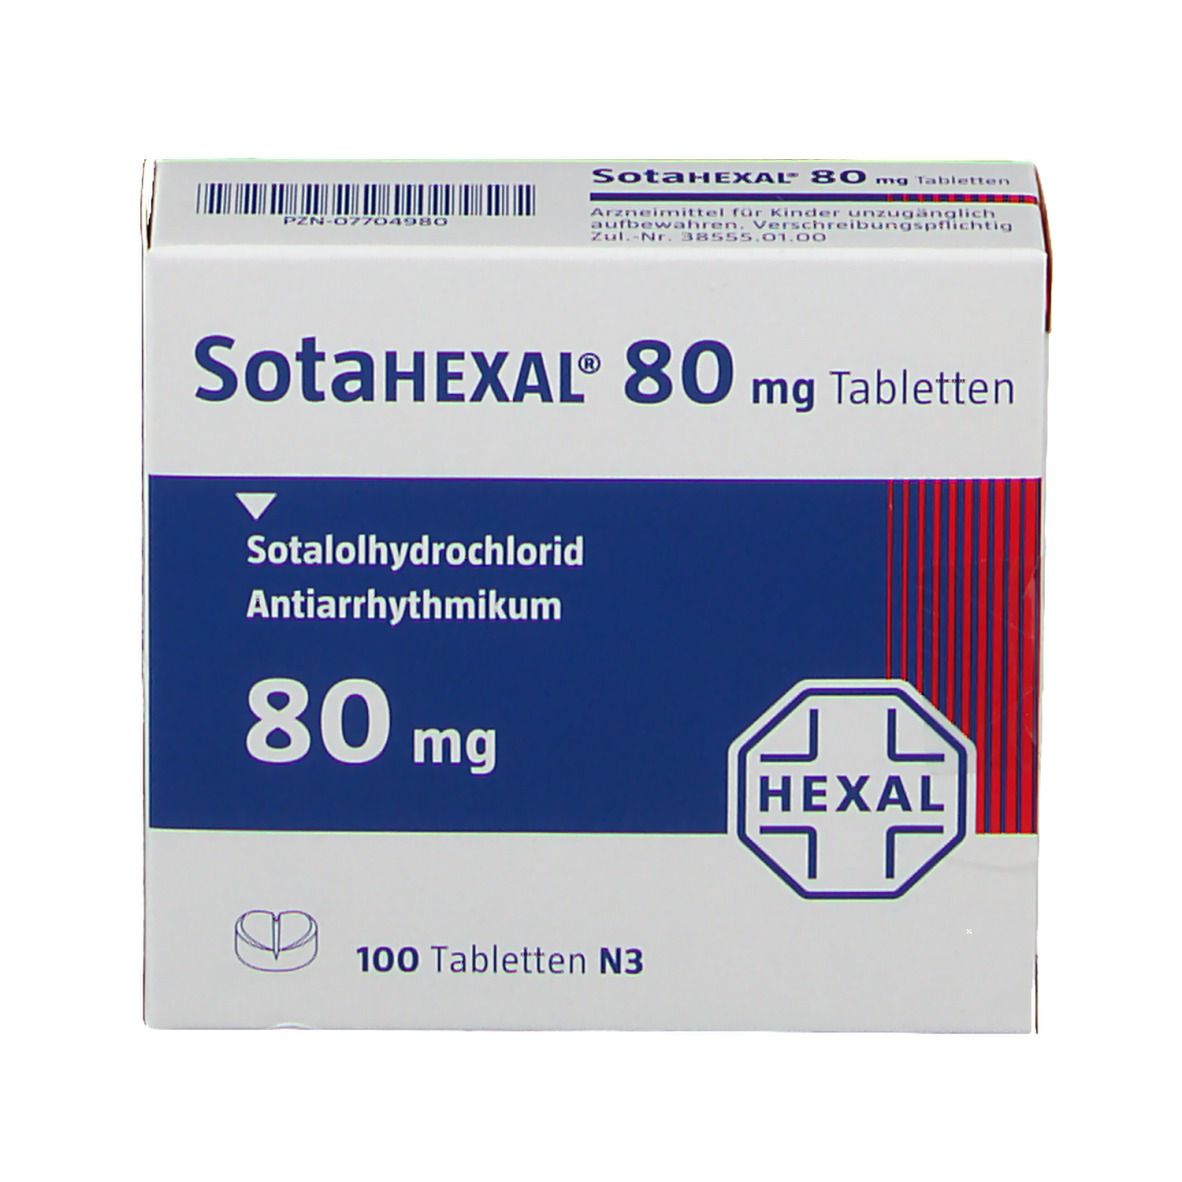 SotaHEXAL® 80 mg